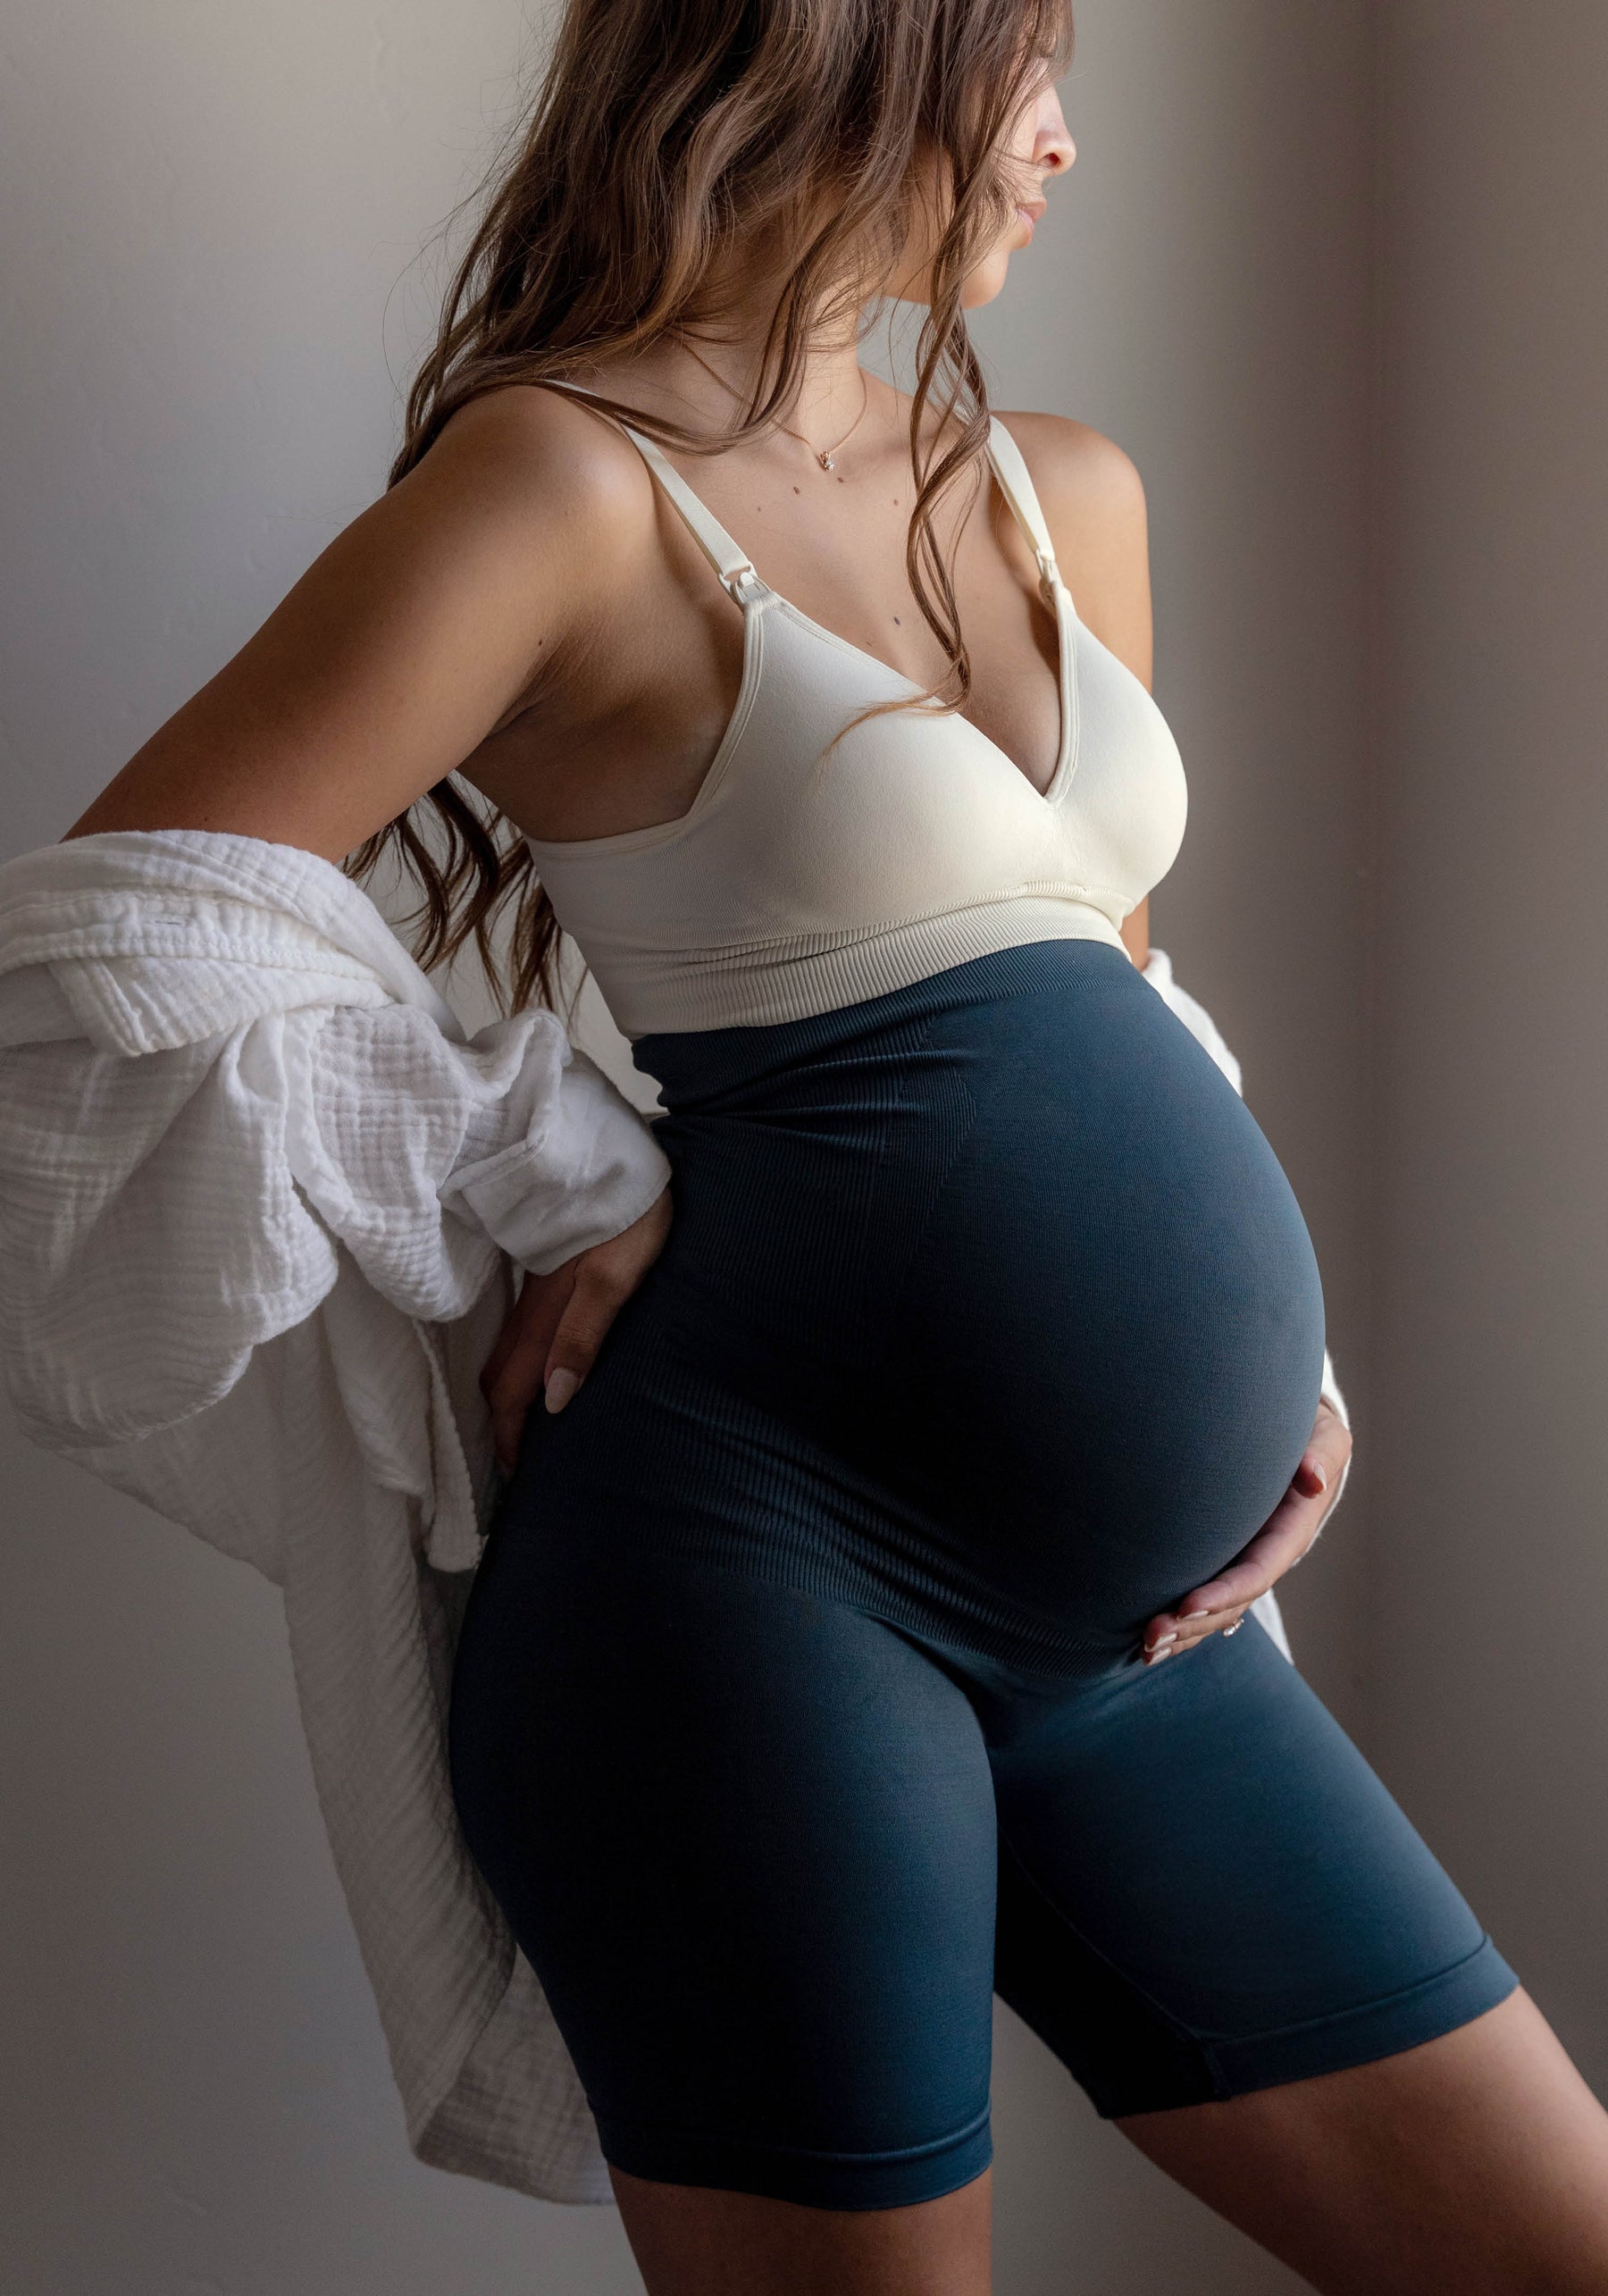 BLANQI Body Cooling Maternity & Nursing Bra - Bone